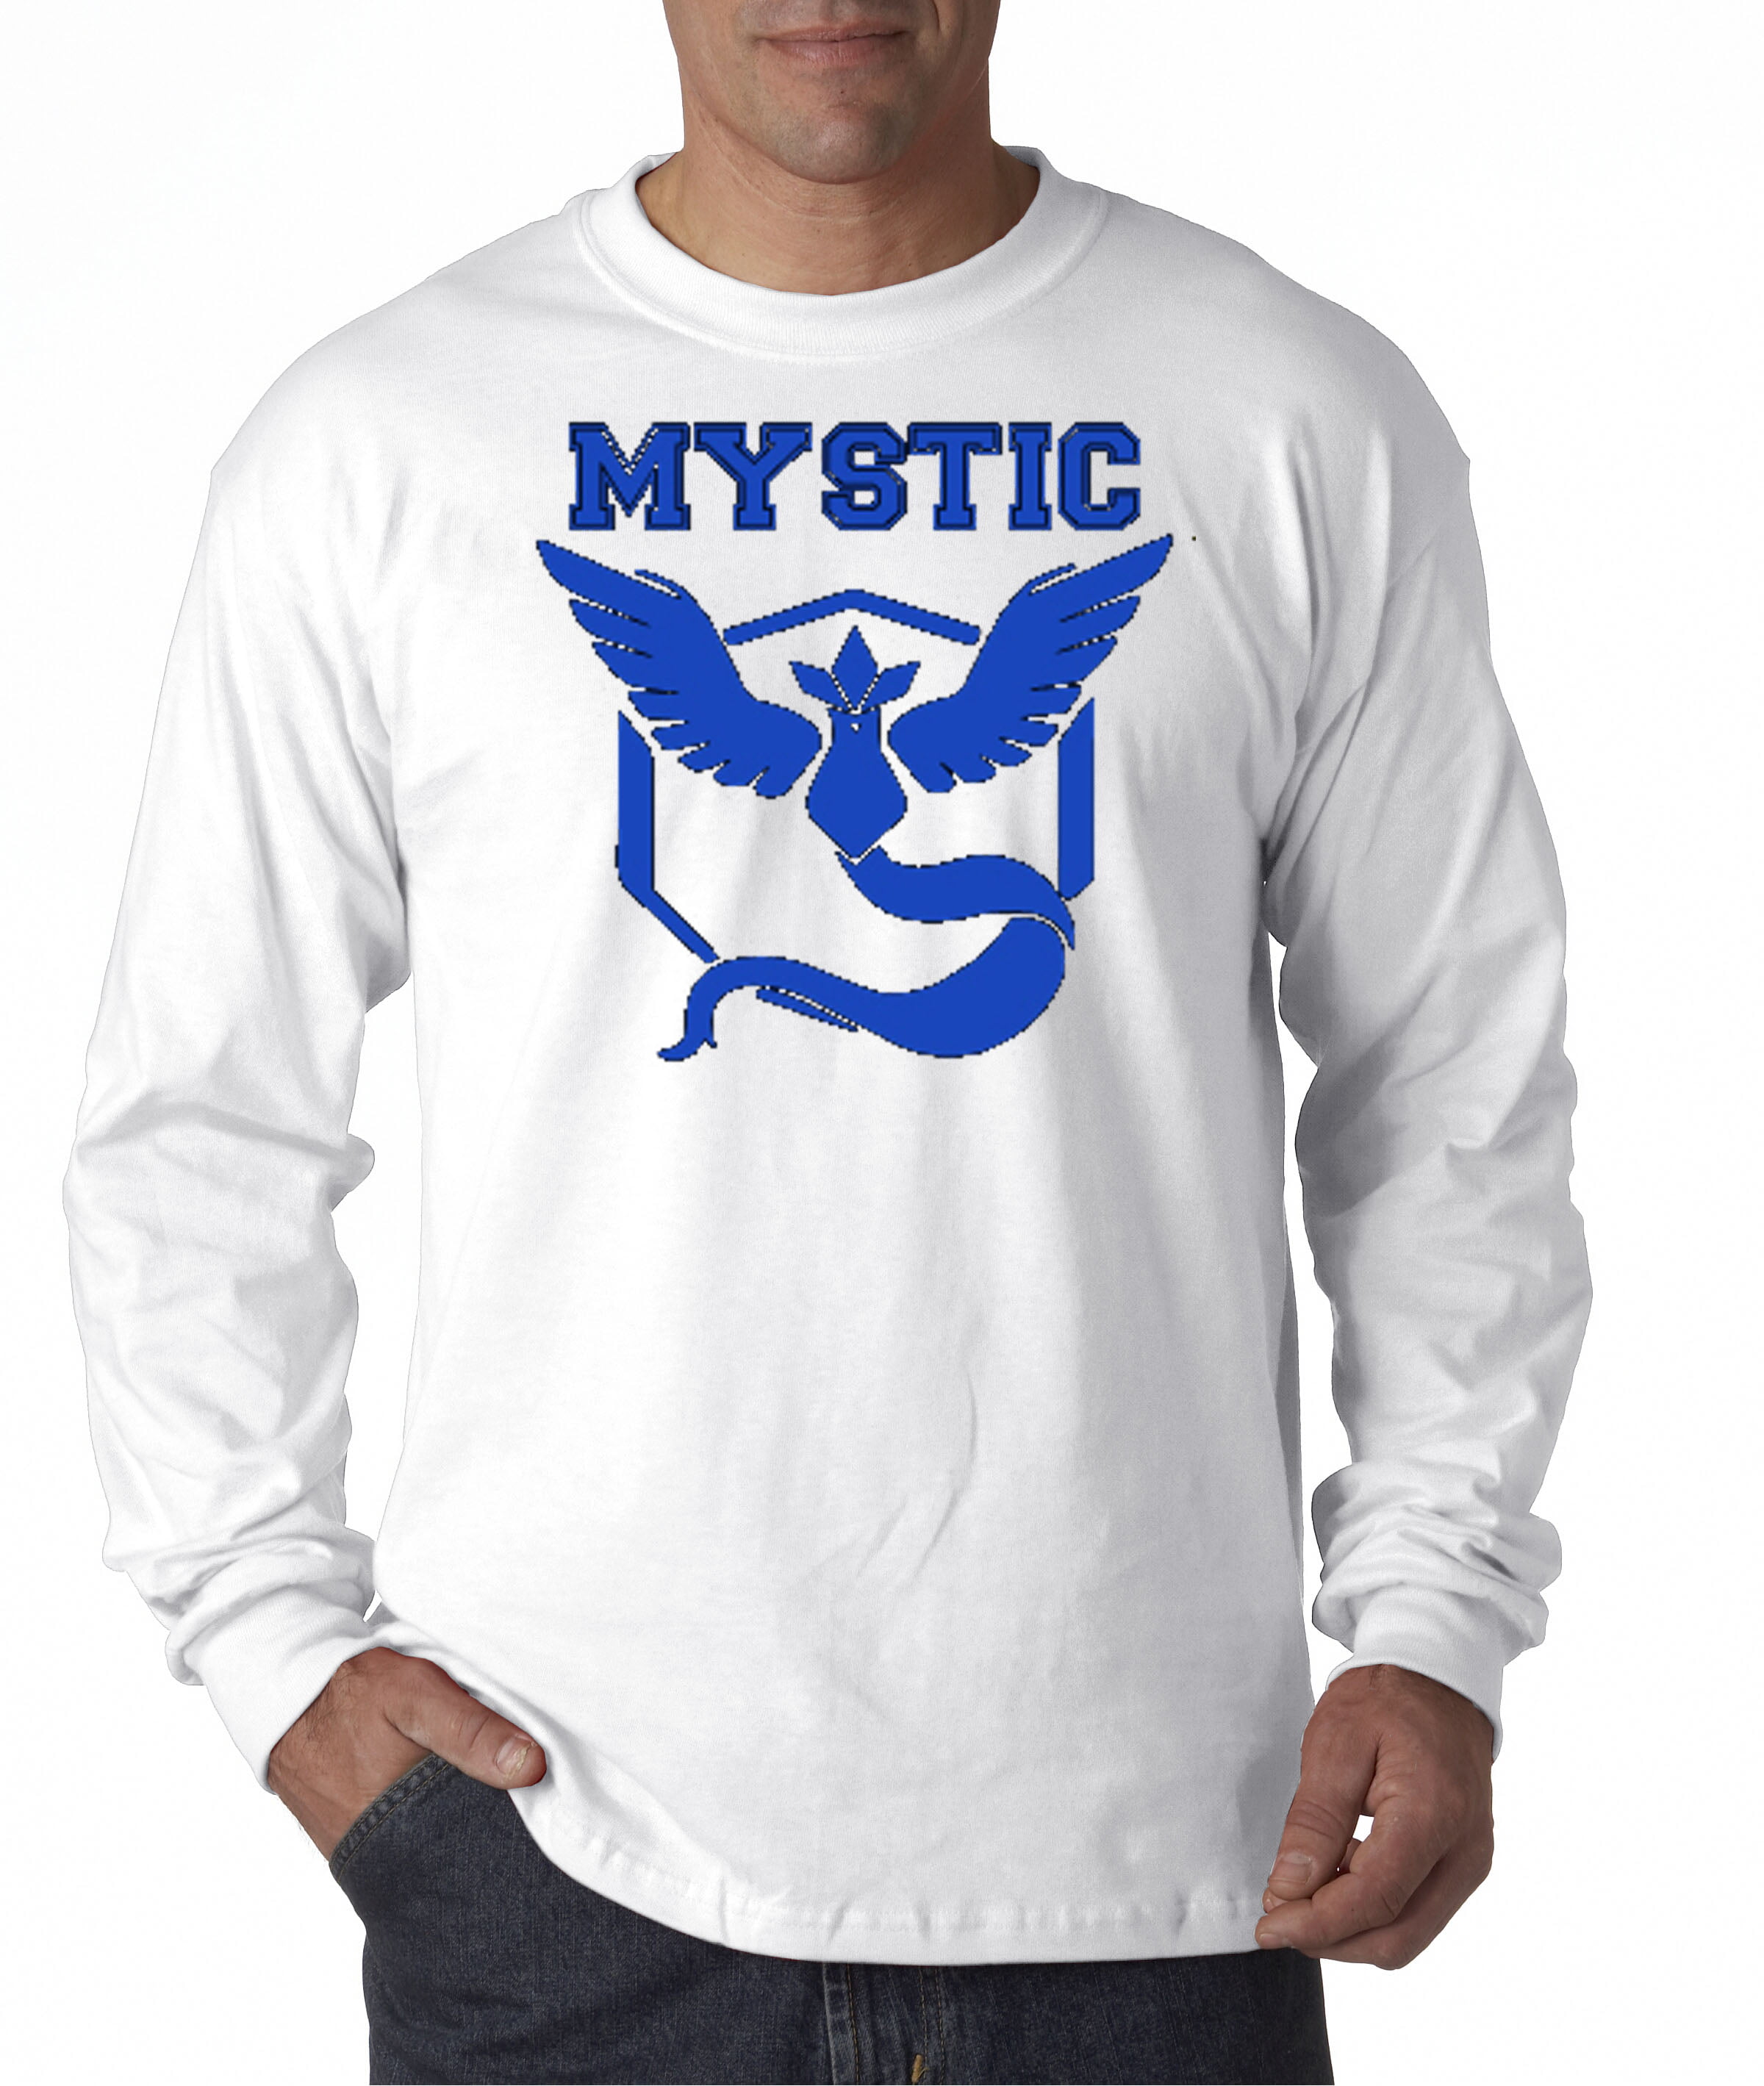 Start-up Company Pokemon Go XL Mystic T-shirt 